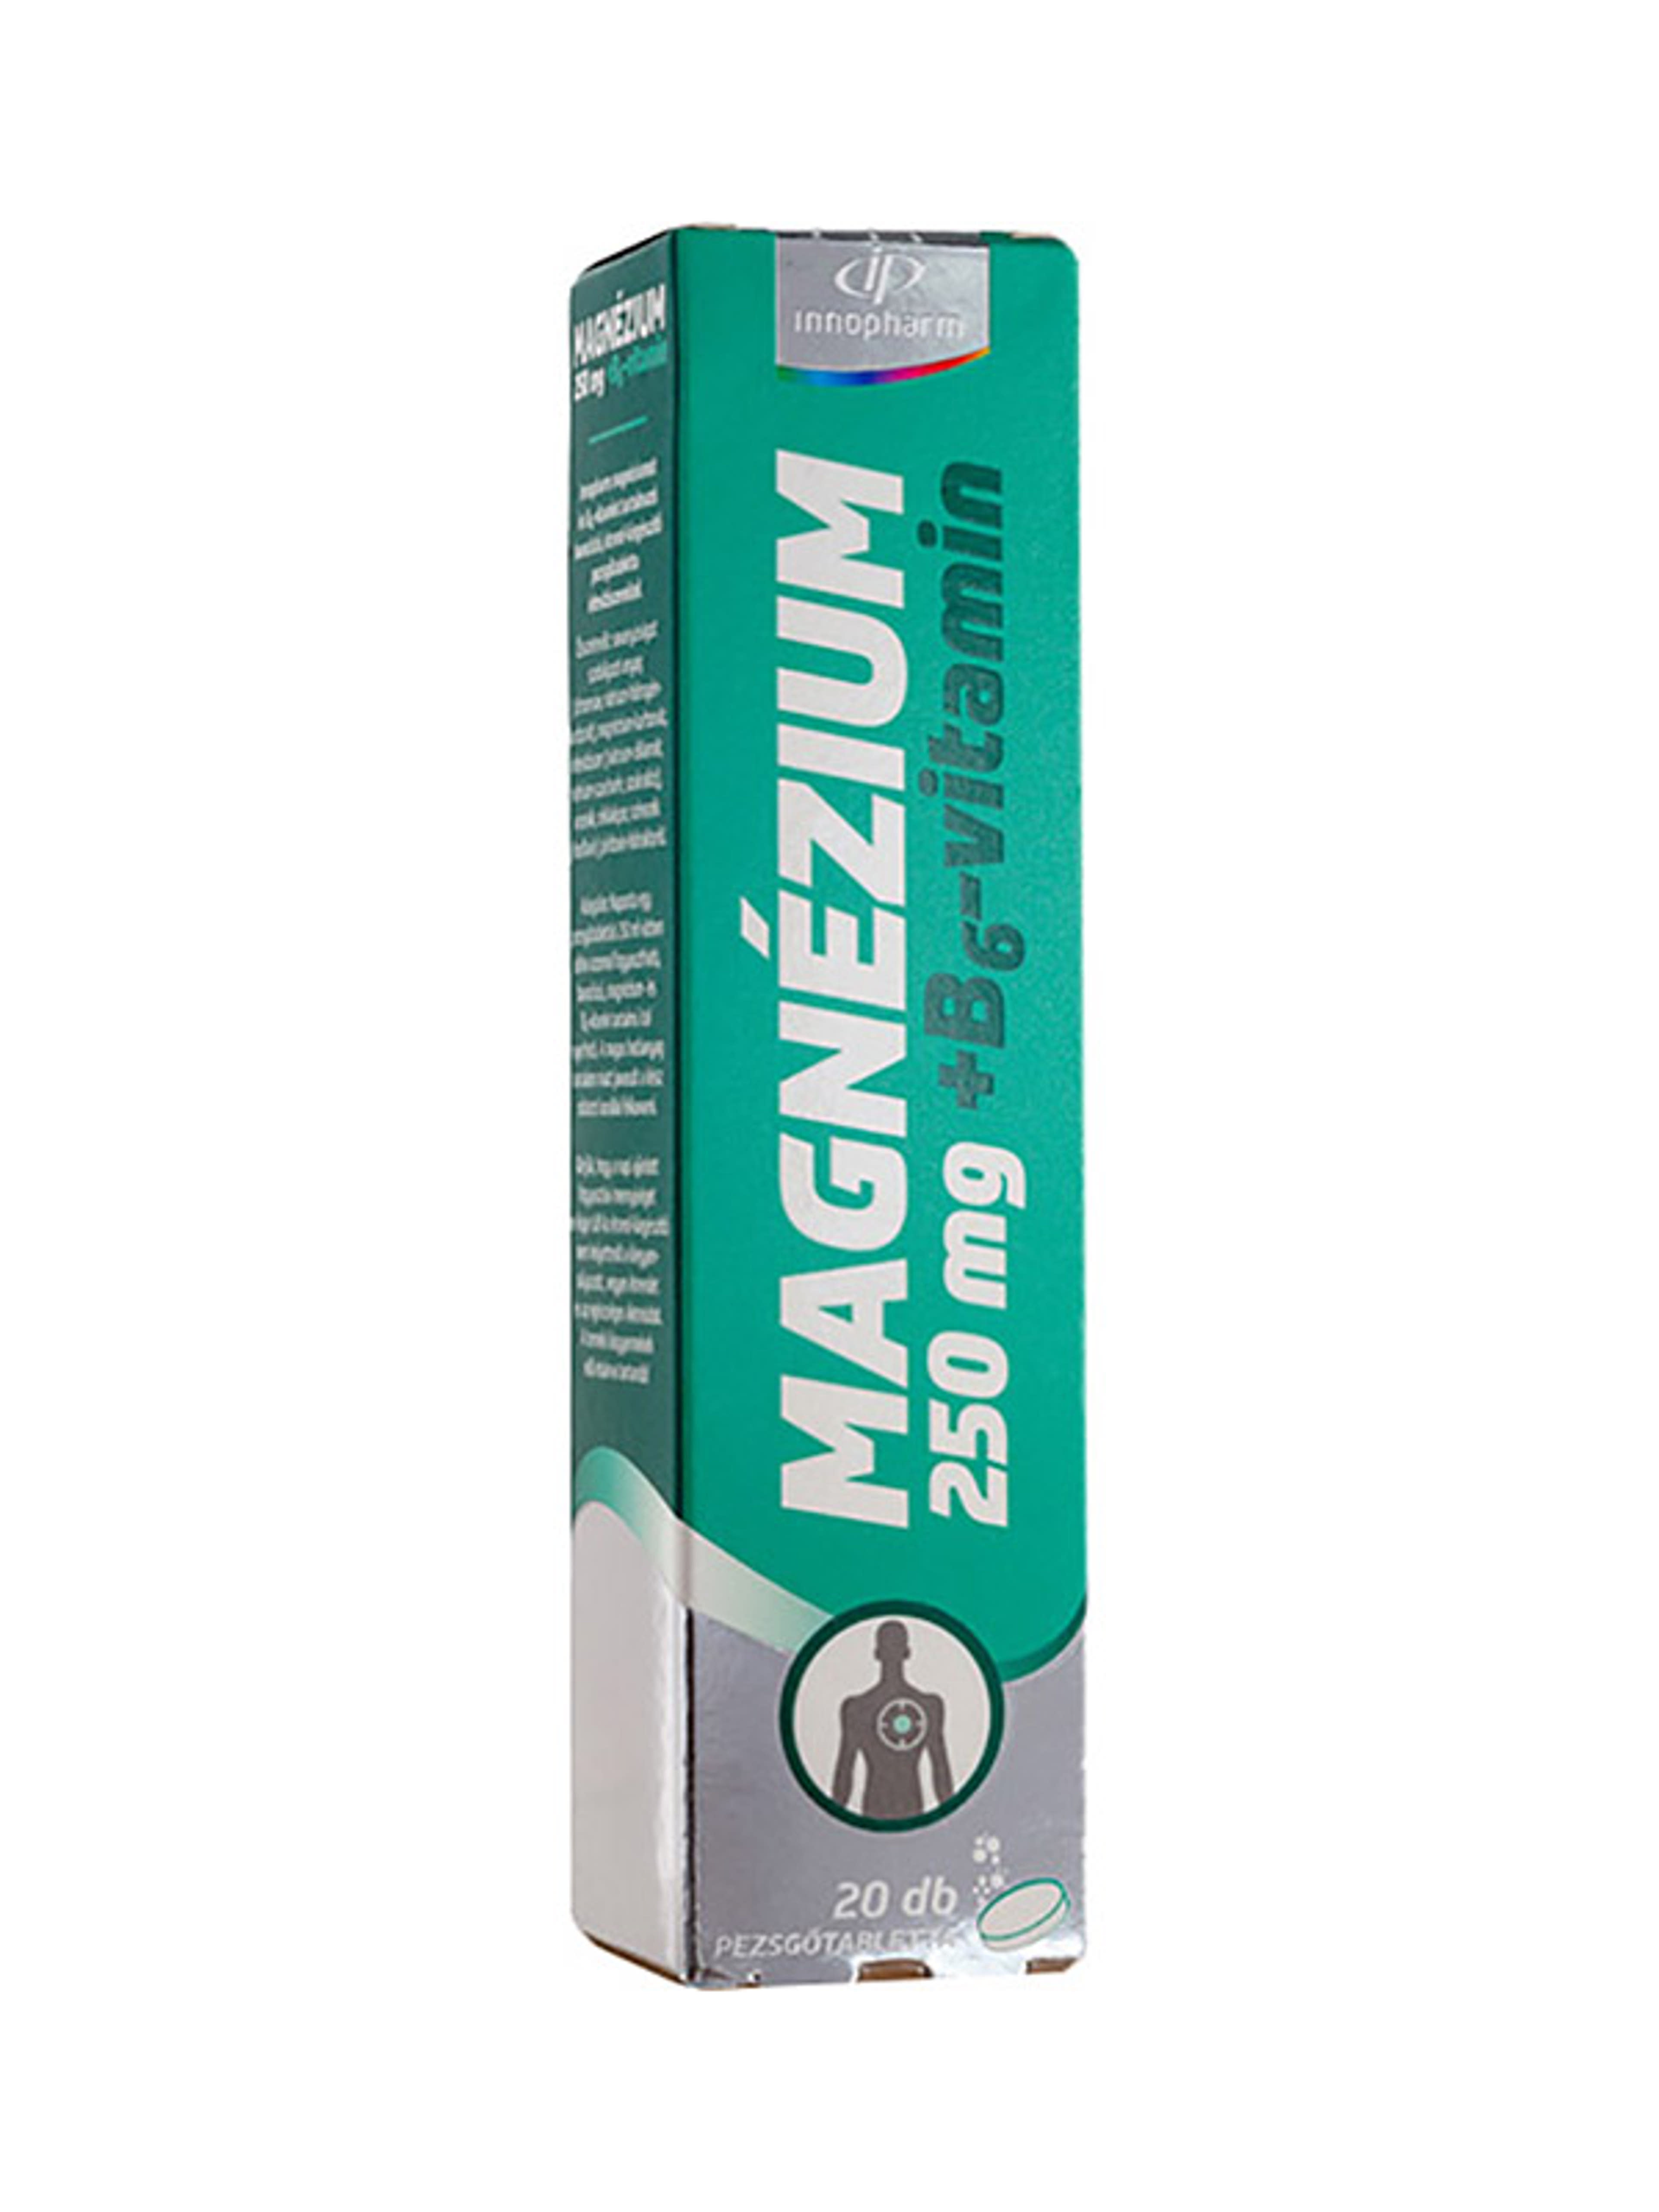 Innopharm Magnesium 250mg+ B6 Pezsgotabletta - 20 db